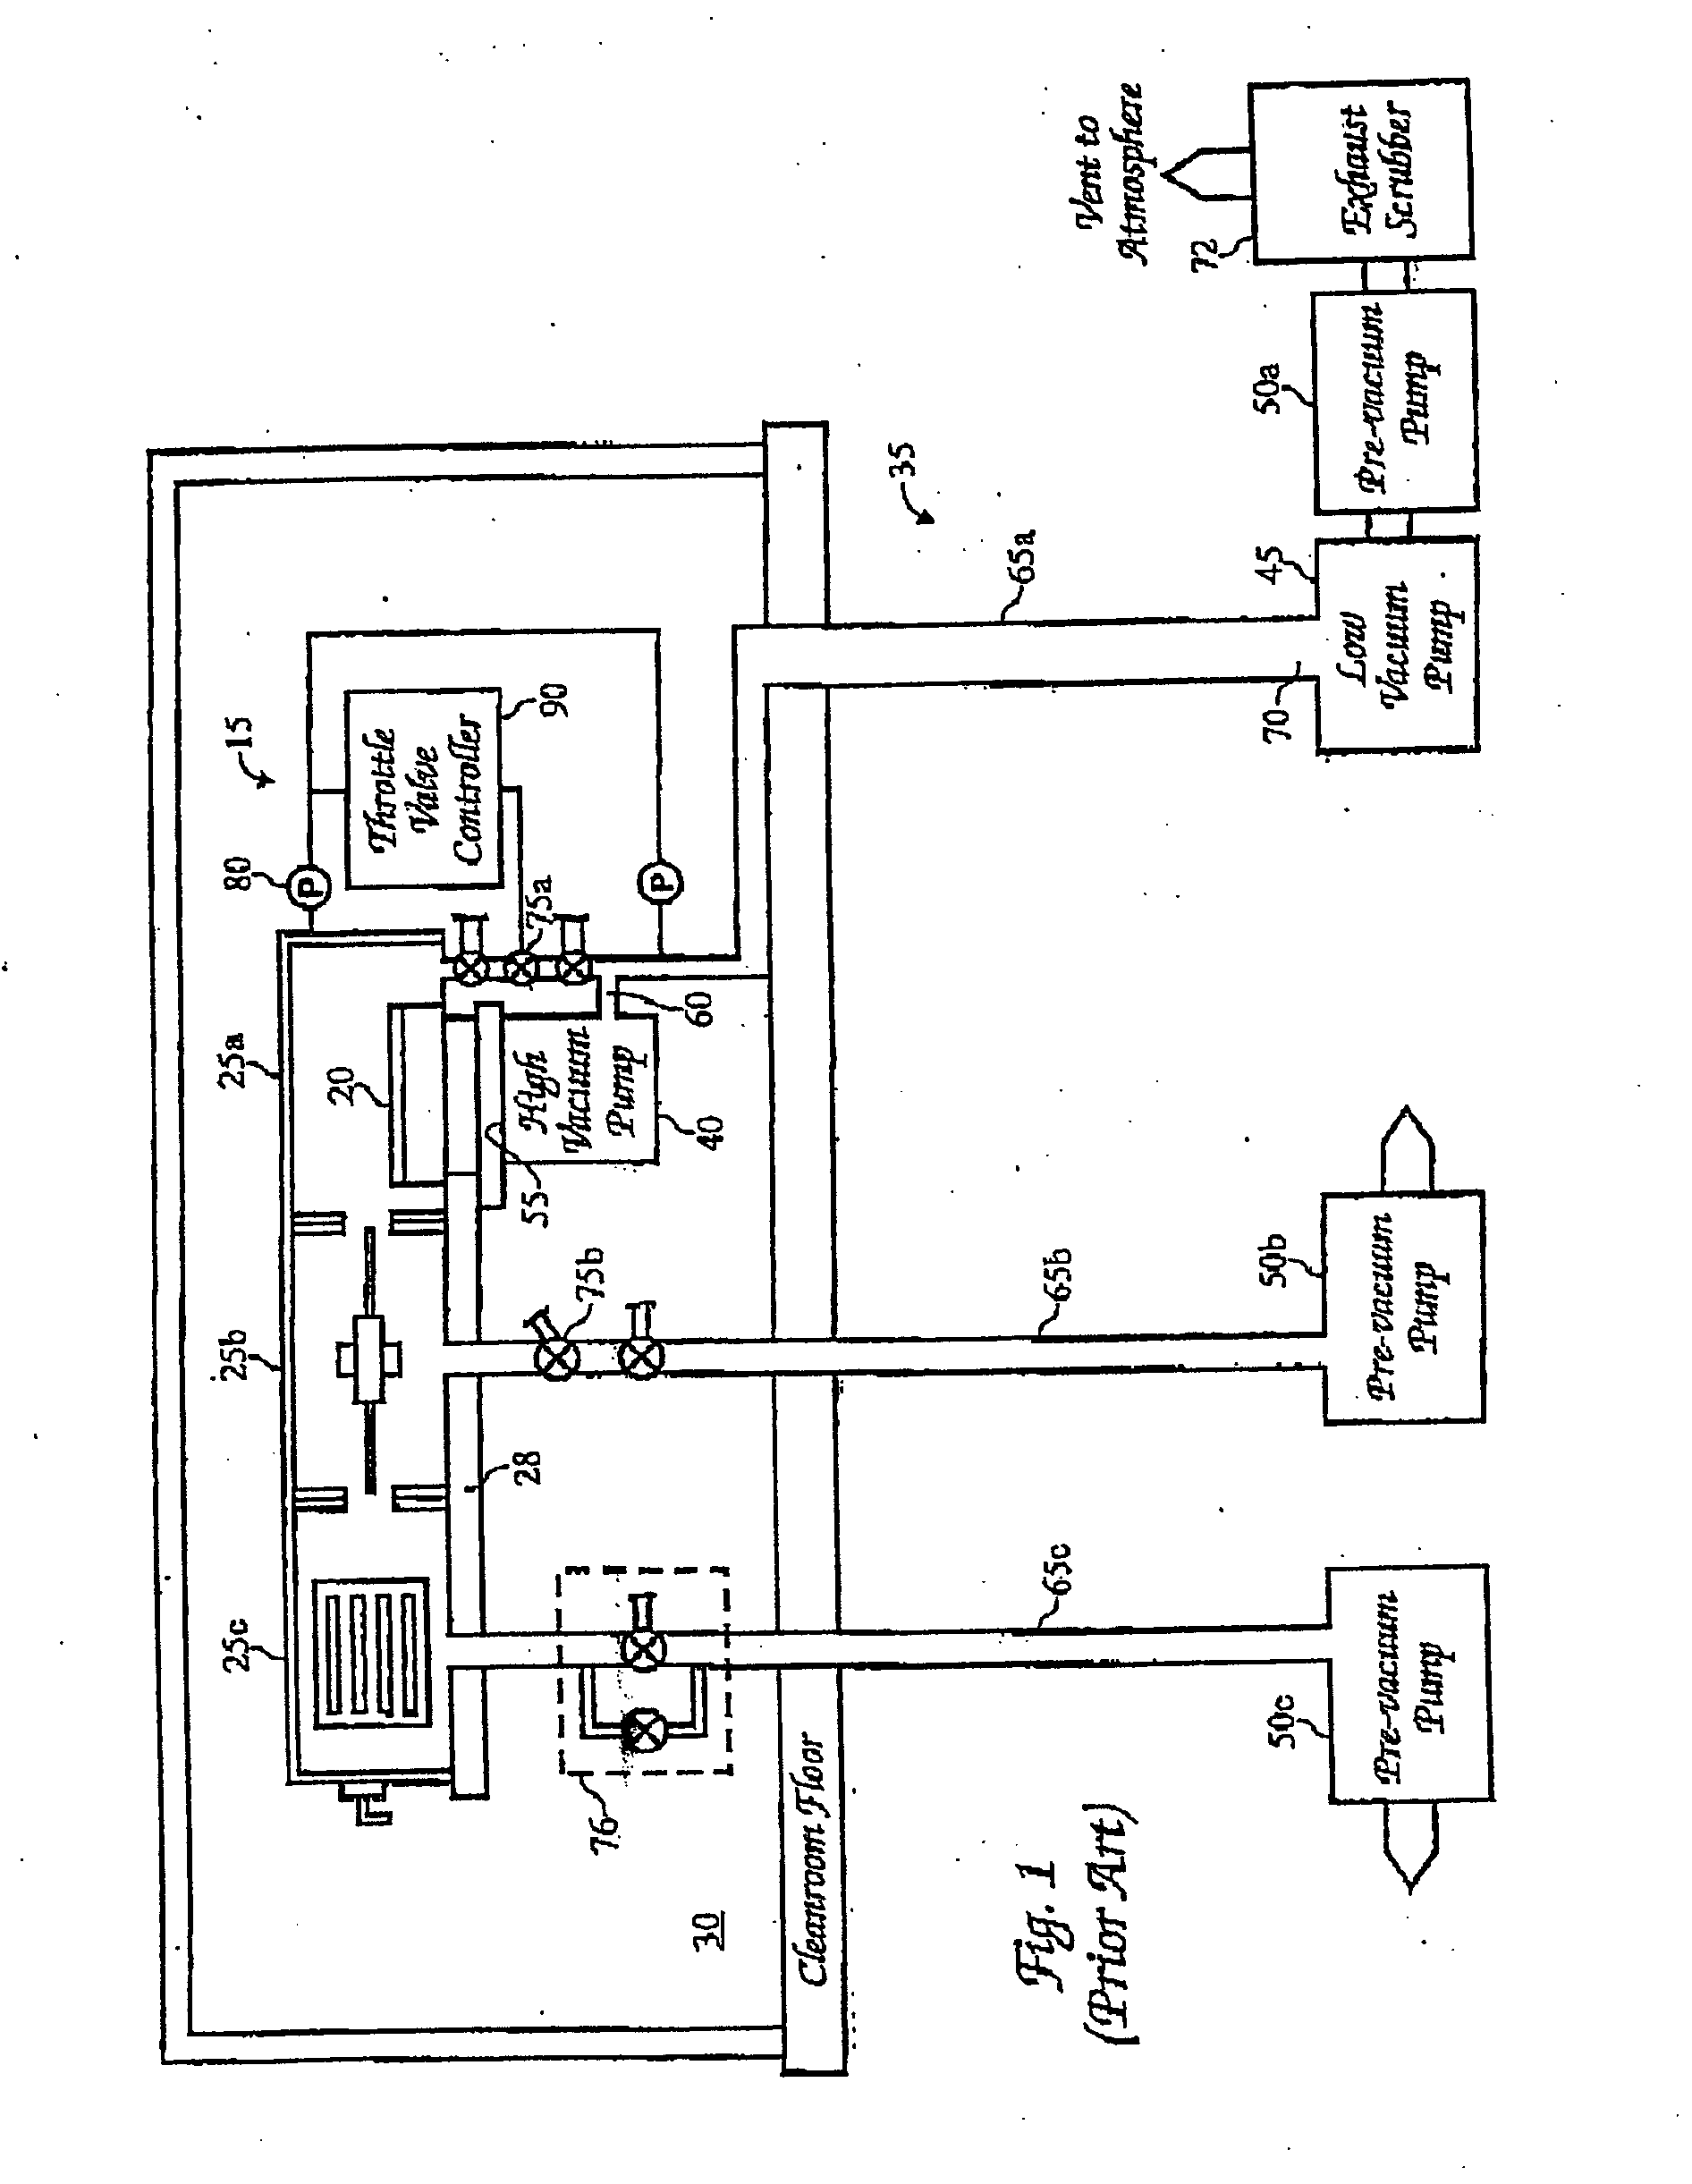 Processing apparatus having integrated pumping system